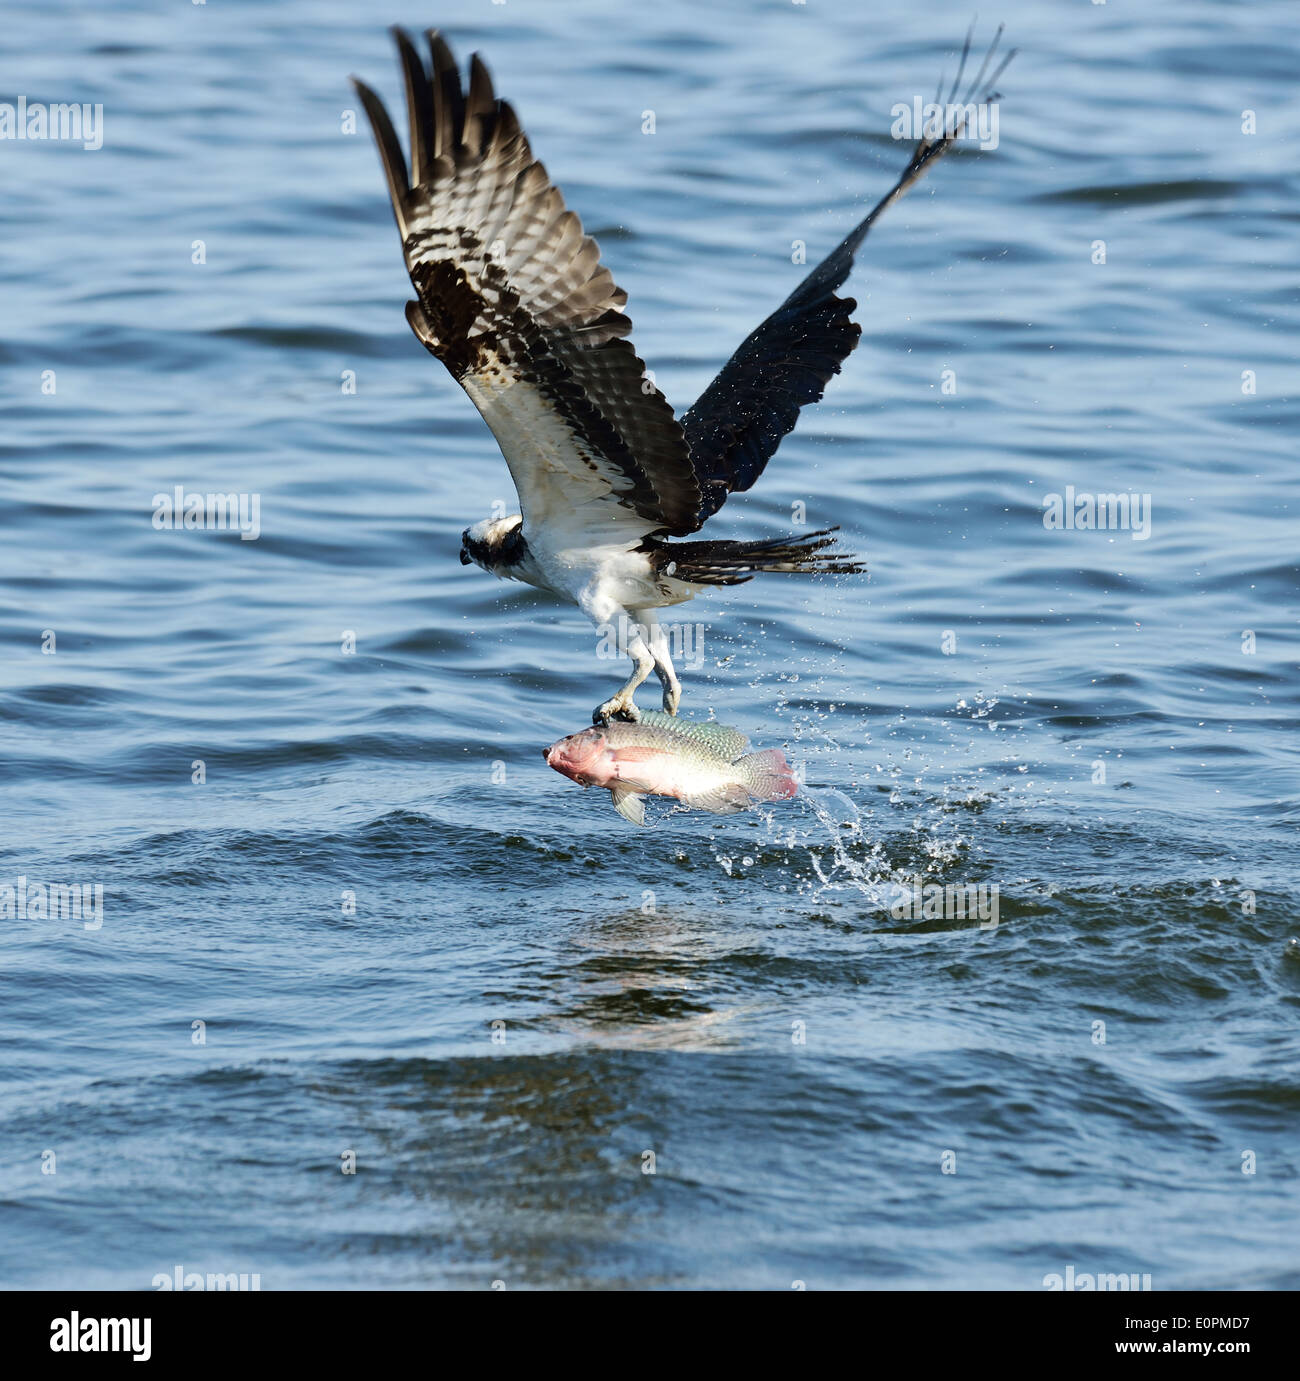 Osprey Catching Fish In Florida Lake Stock Photo